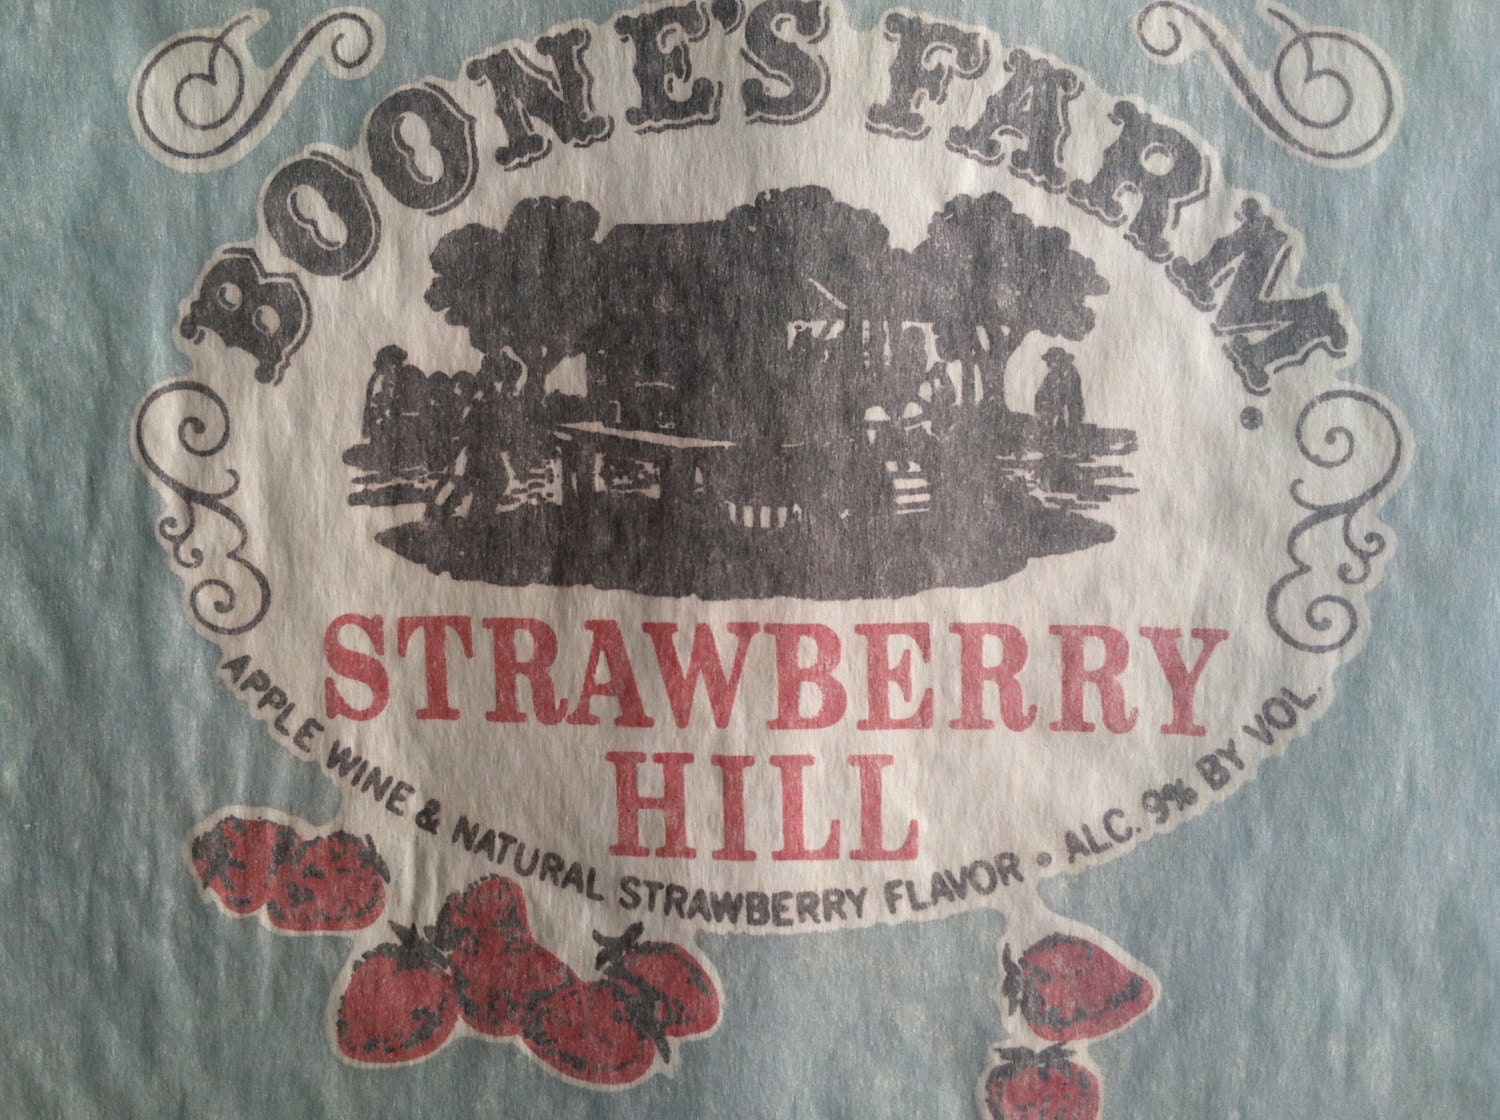 1970's style BOONES FARM Strawberry Hill Apple WINE unused